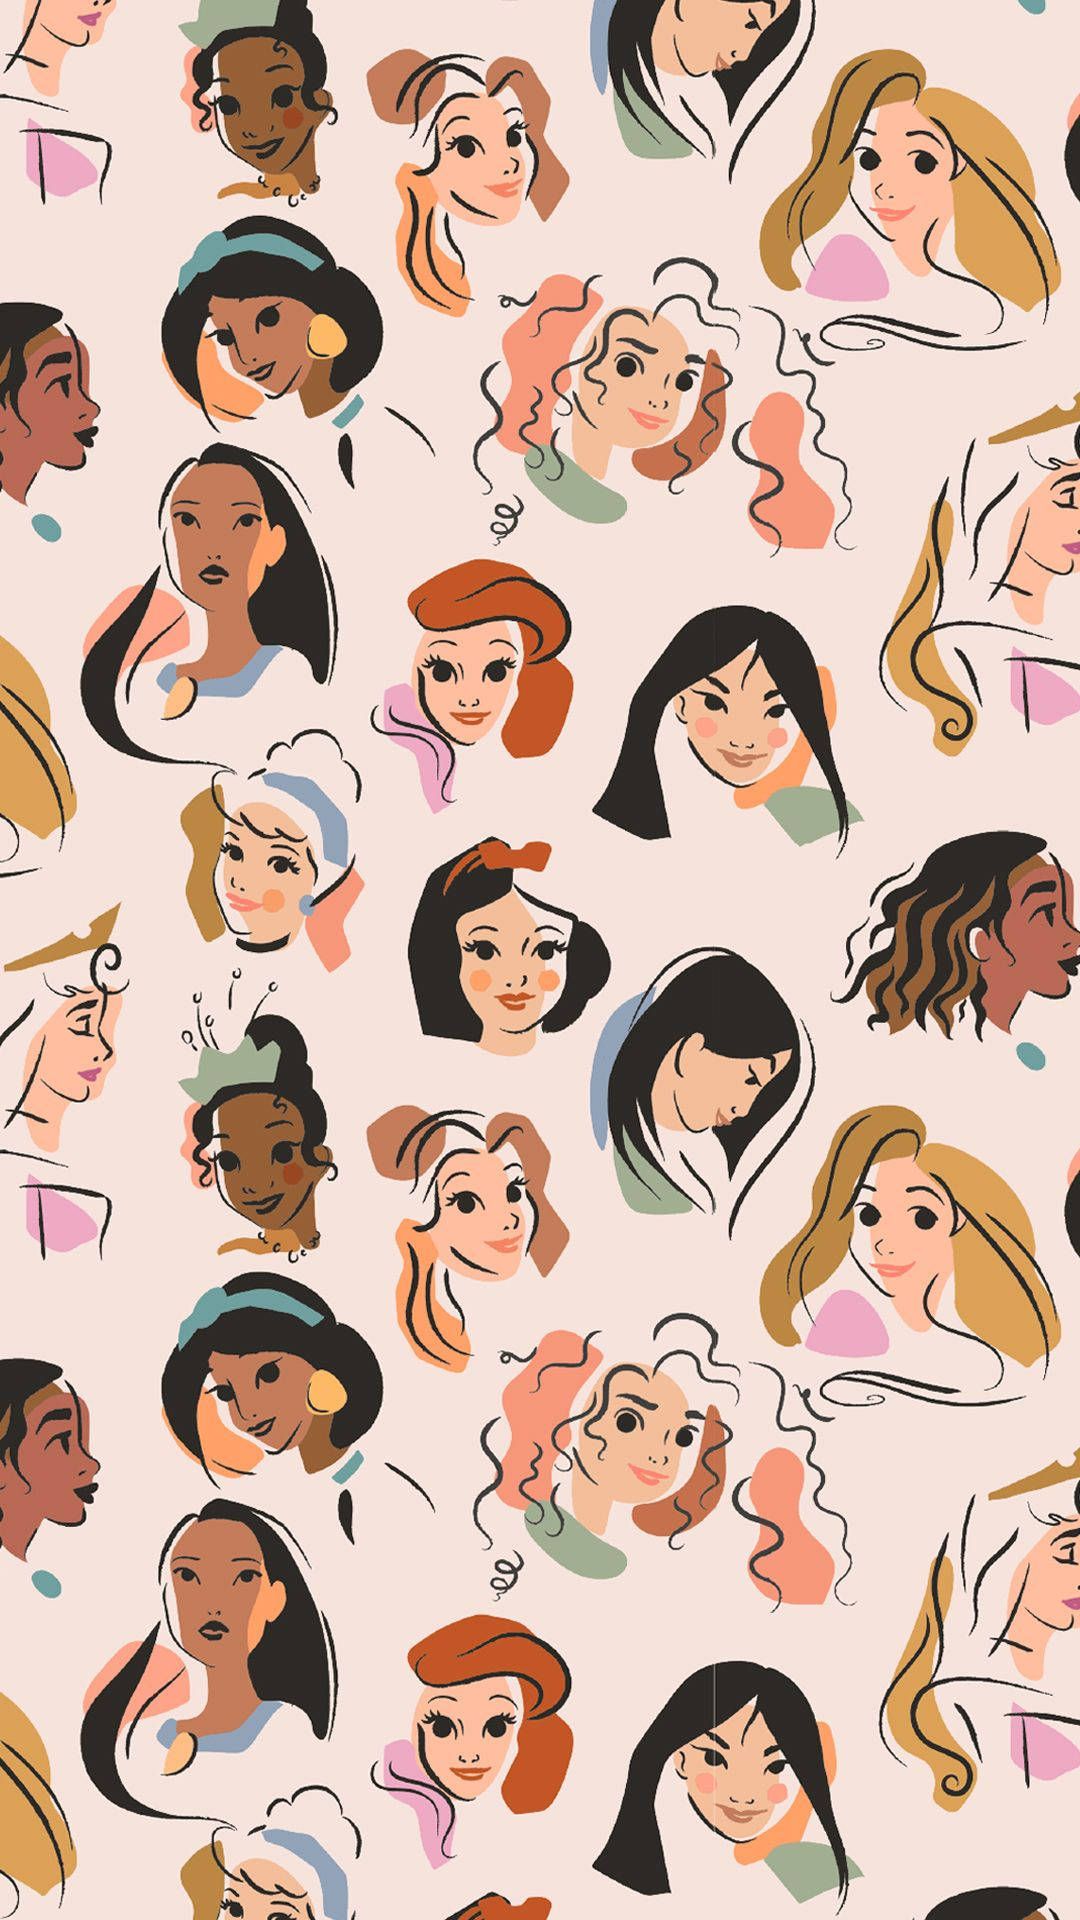 Free Cute Aesthetic Disney Princess Wallpaper Downloads, Cute Aesthetic Disney Princess Wallpaper for FREE